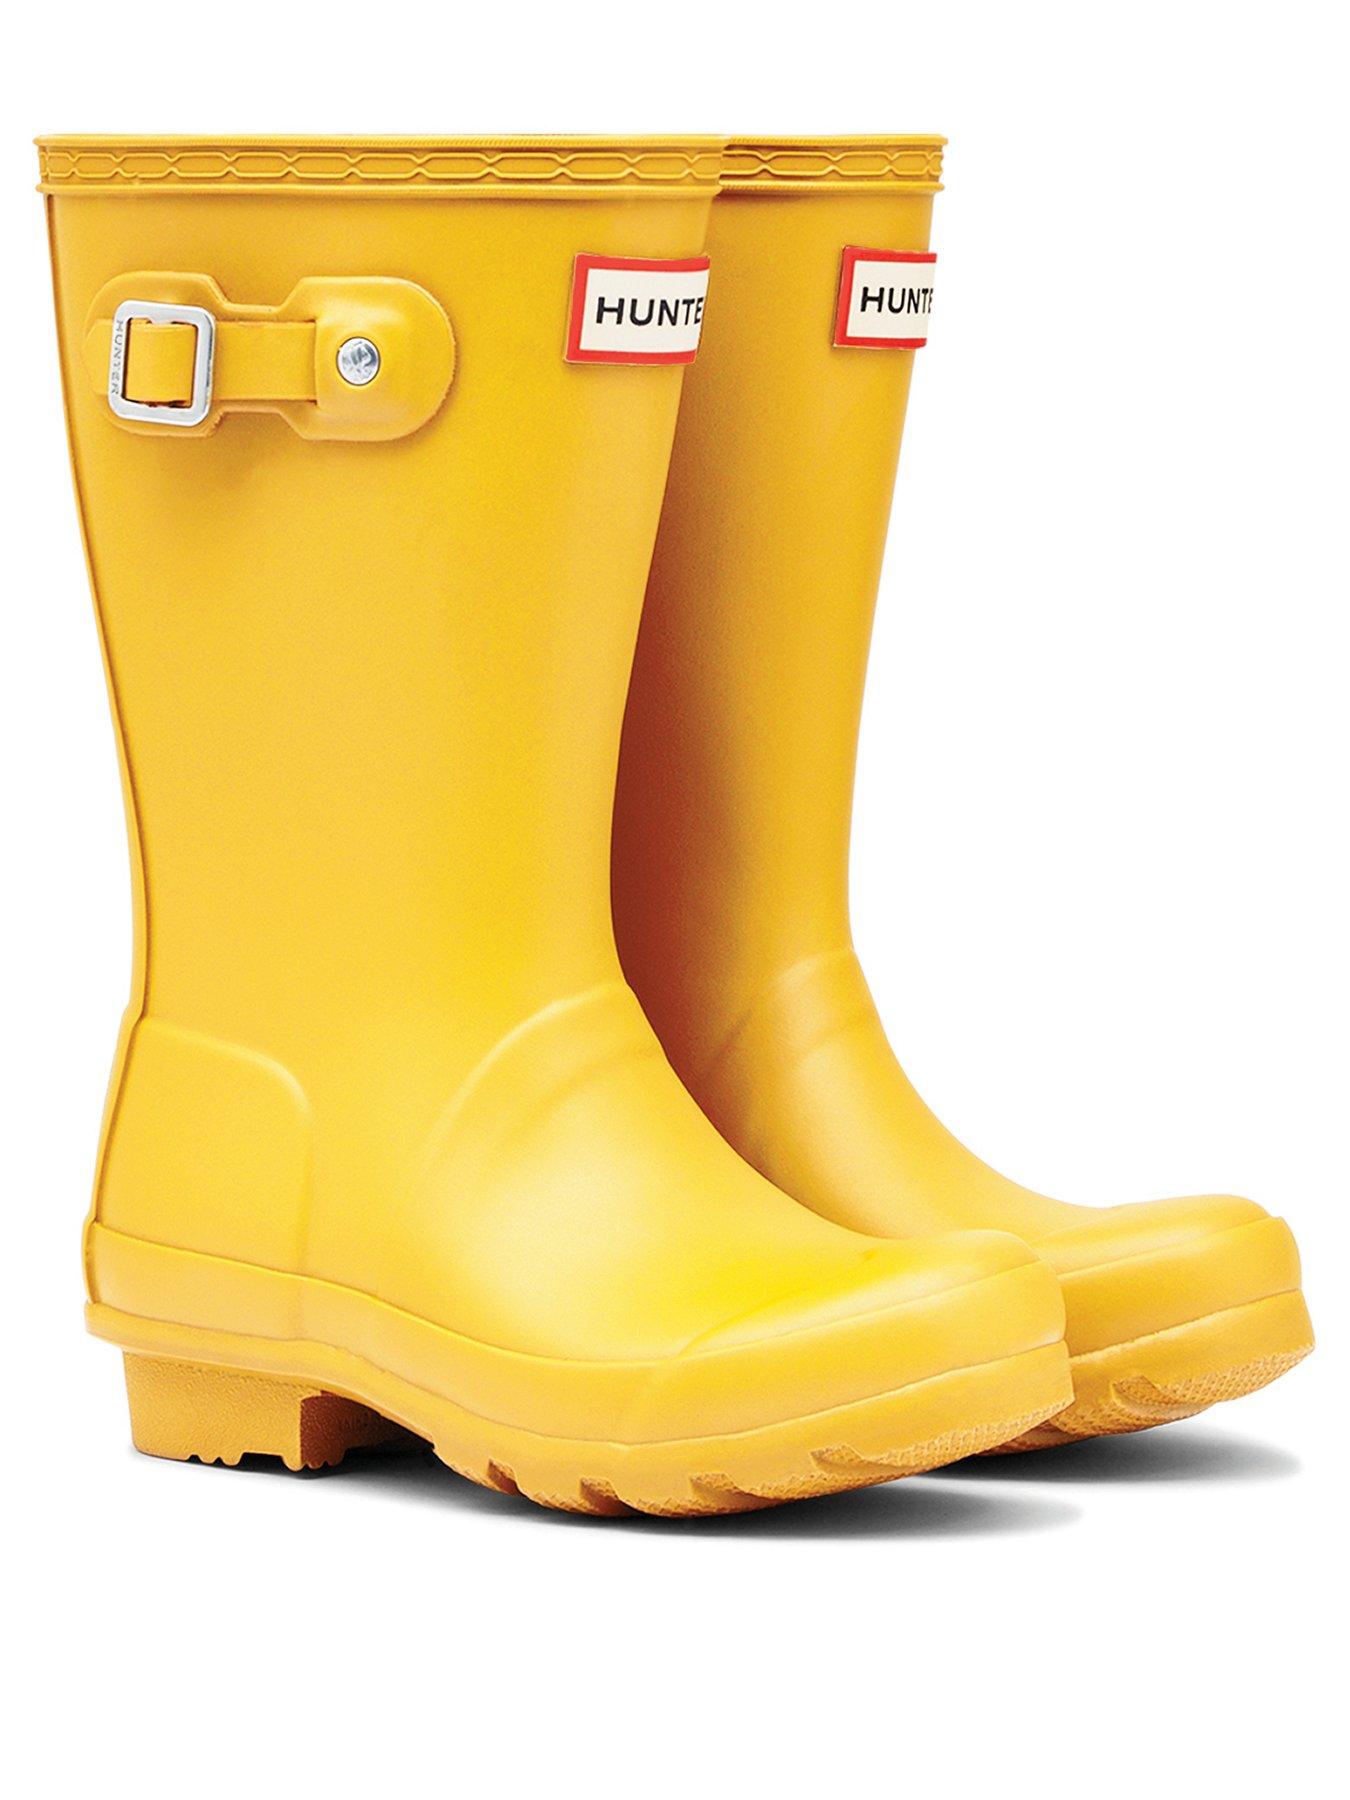  pHunter Kids Original Wellington Boots - Yellow/p